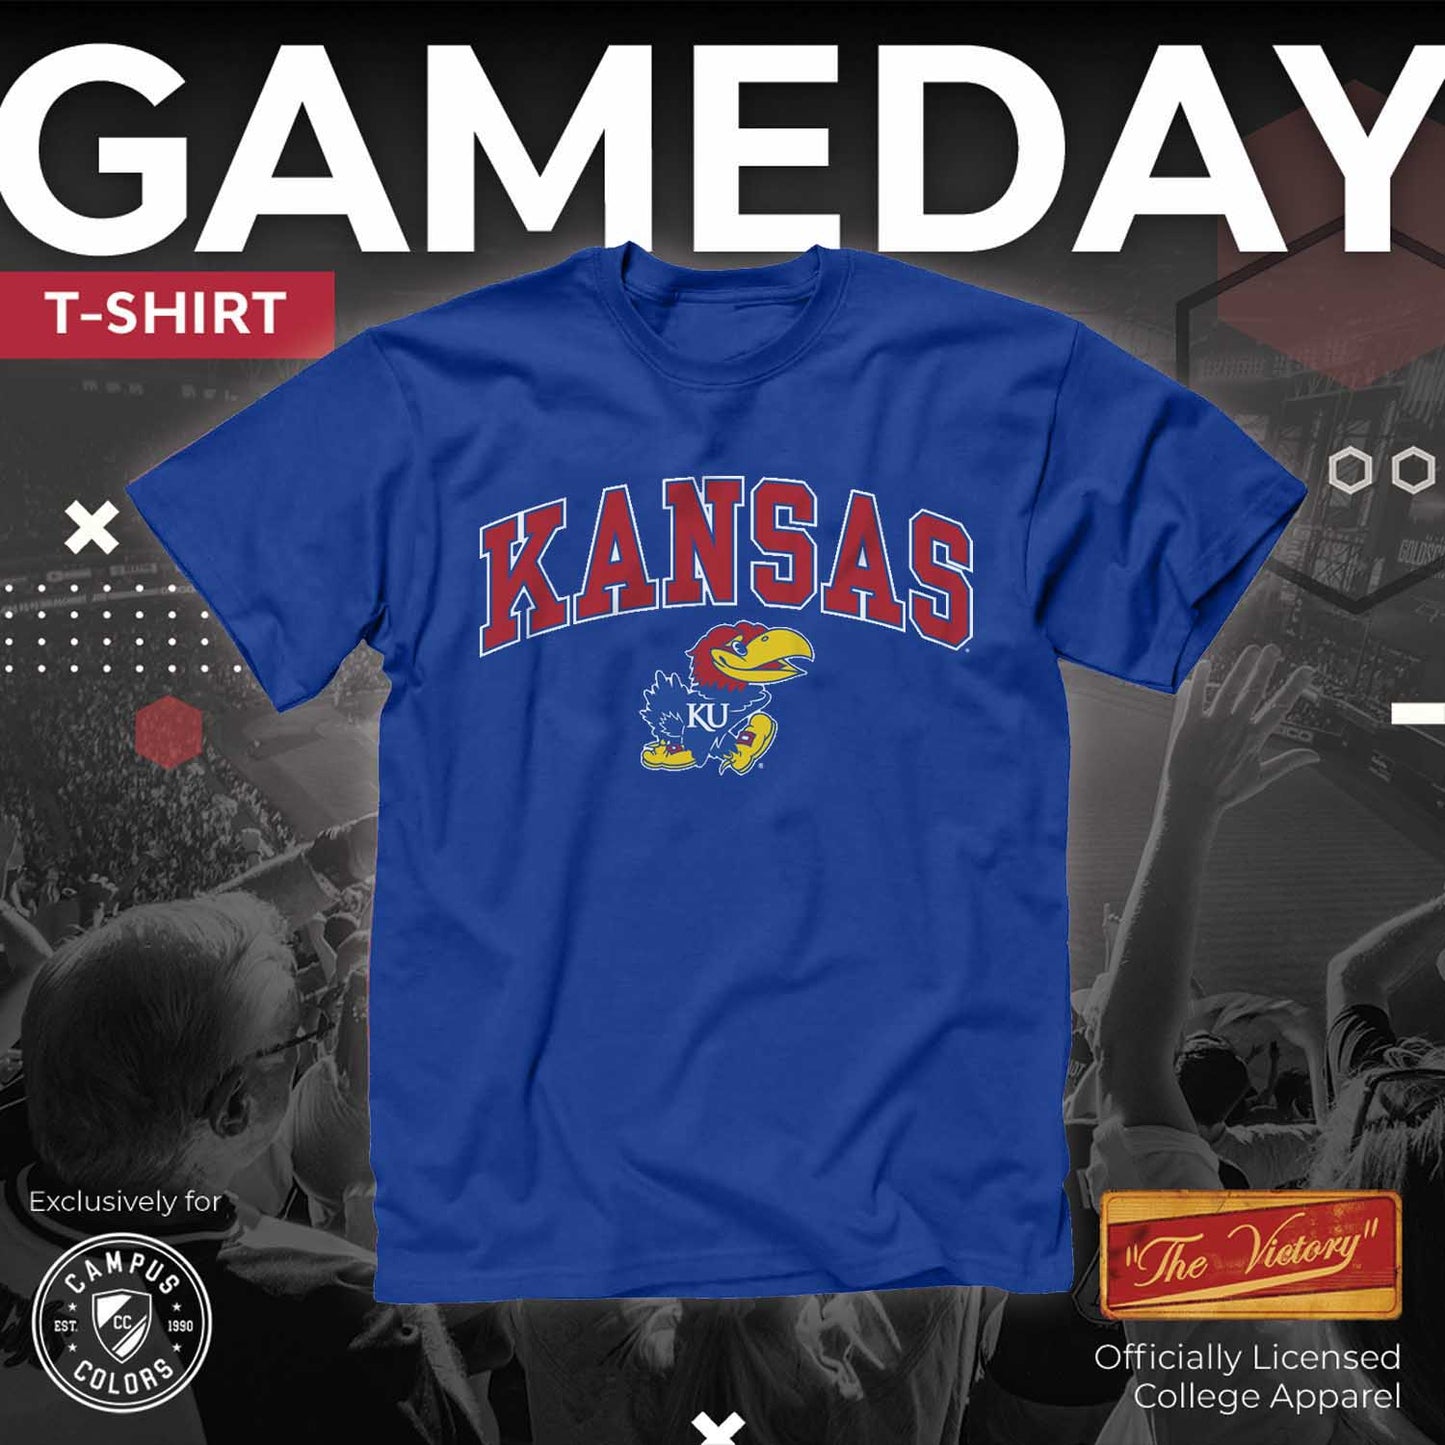 Kansas Jayhawks Adult Arch & Logo Soft Style Gameday T-Shirt - Royal